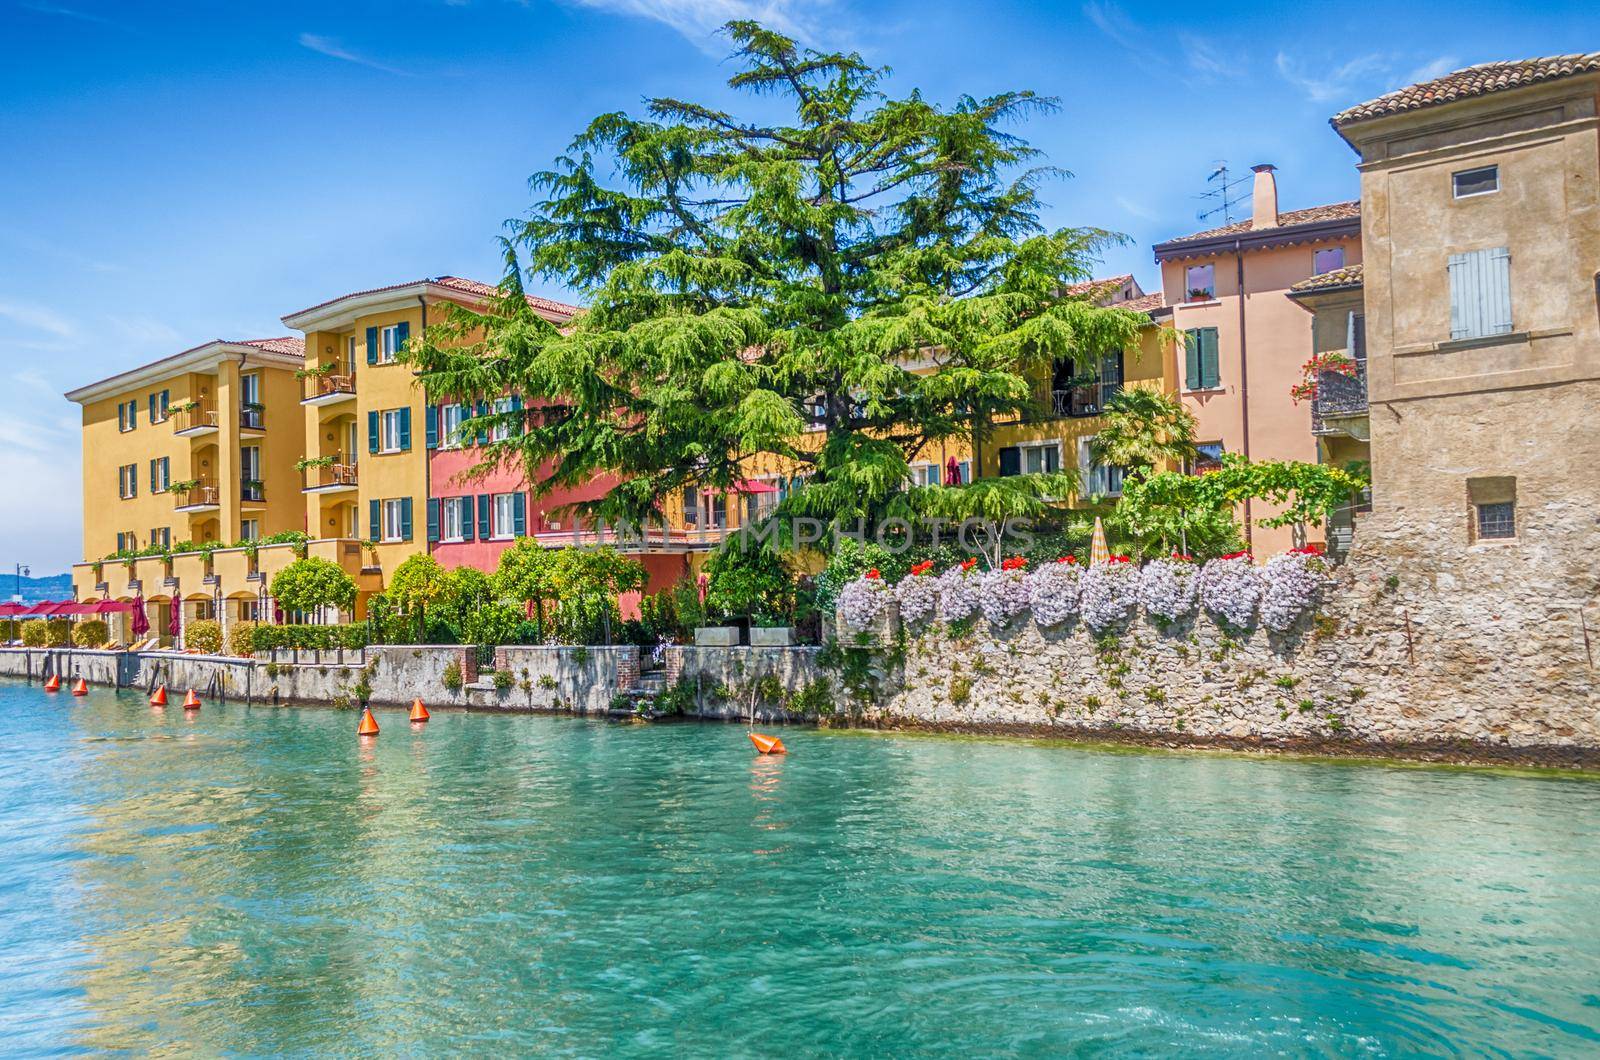 Scenic view of Sirmione, Lake Garda, Italy by marcorubino